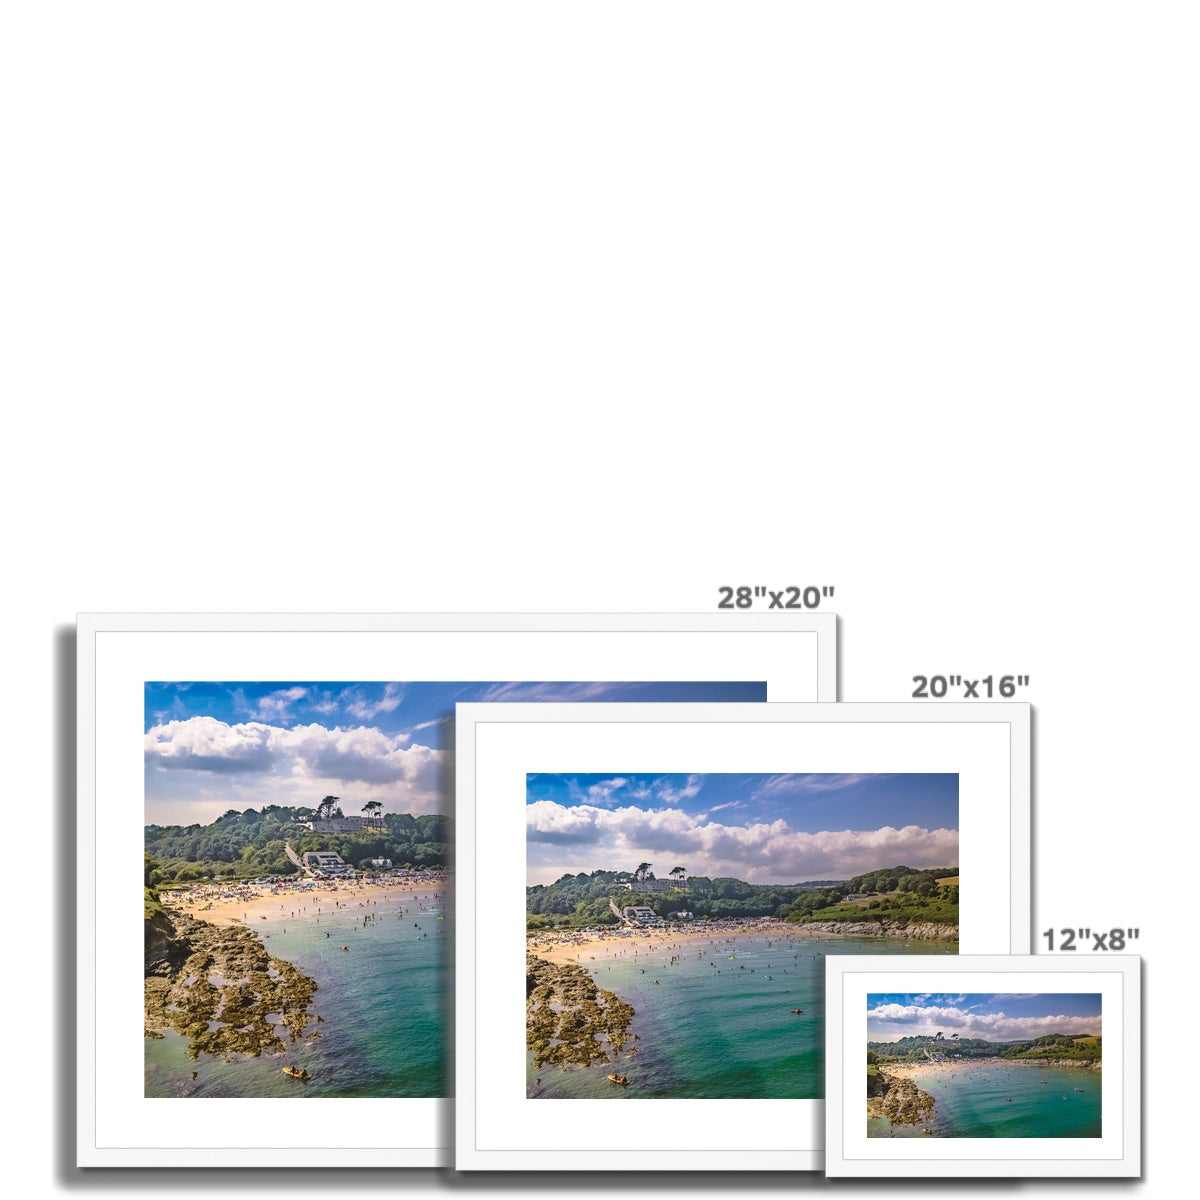 maenporth beach frame sizes